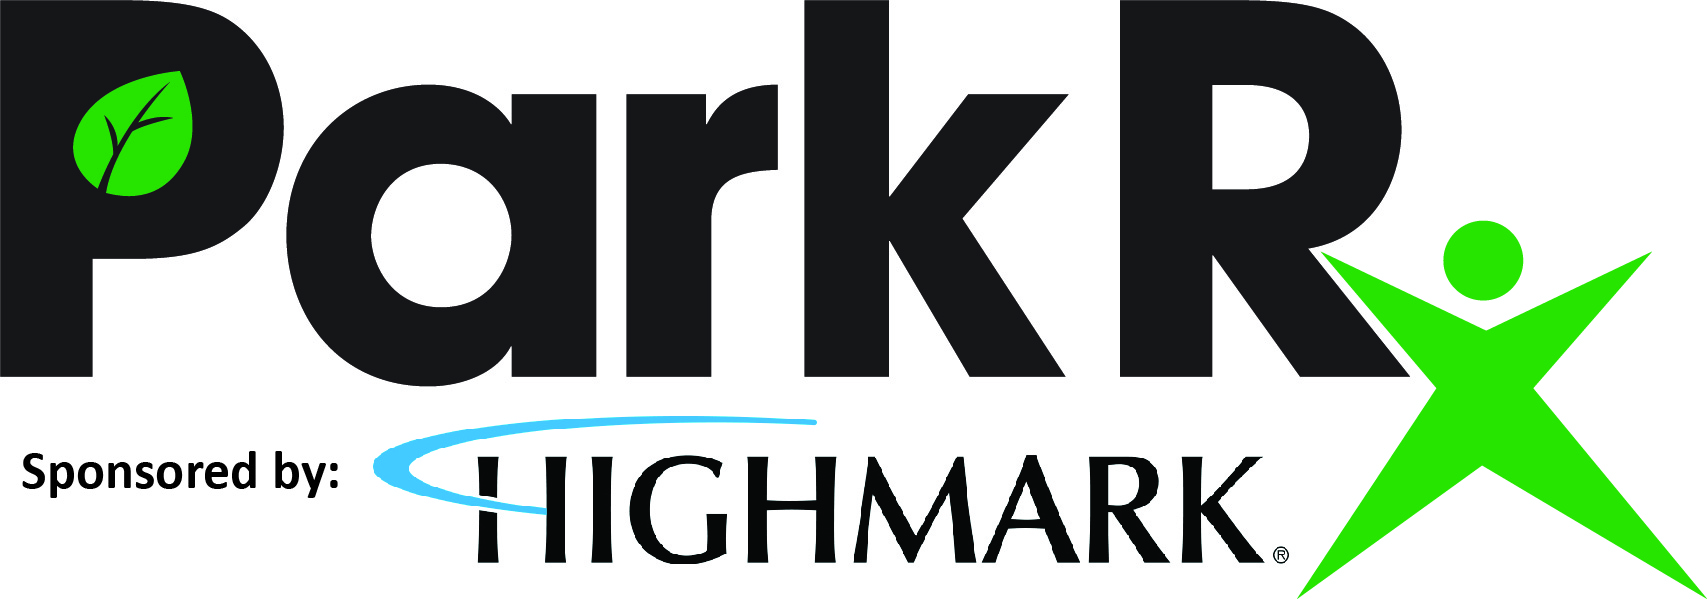 Park Rx program logo sponsored by Highmark